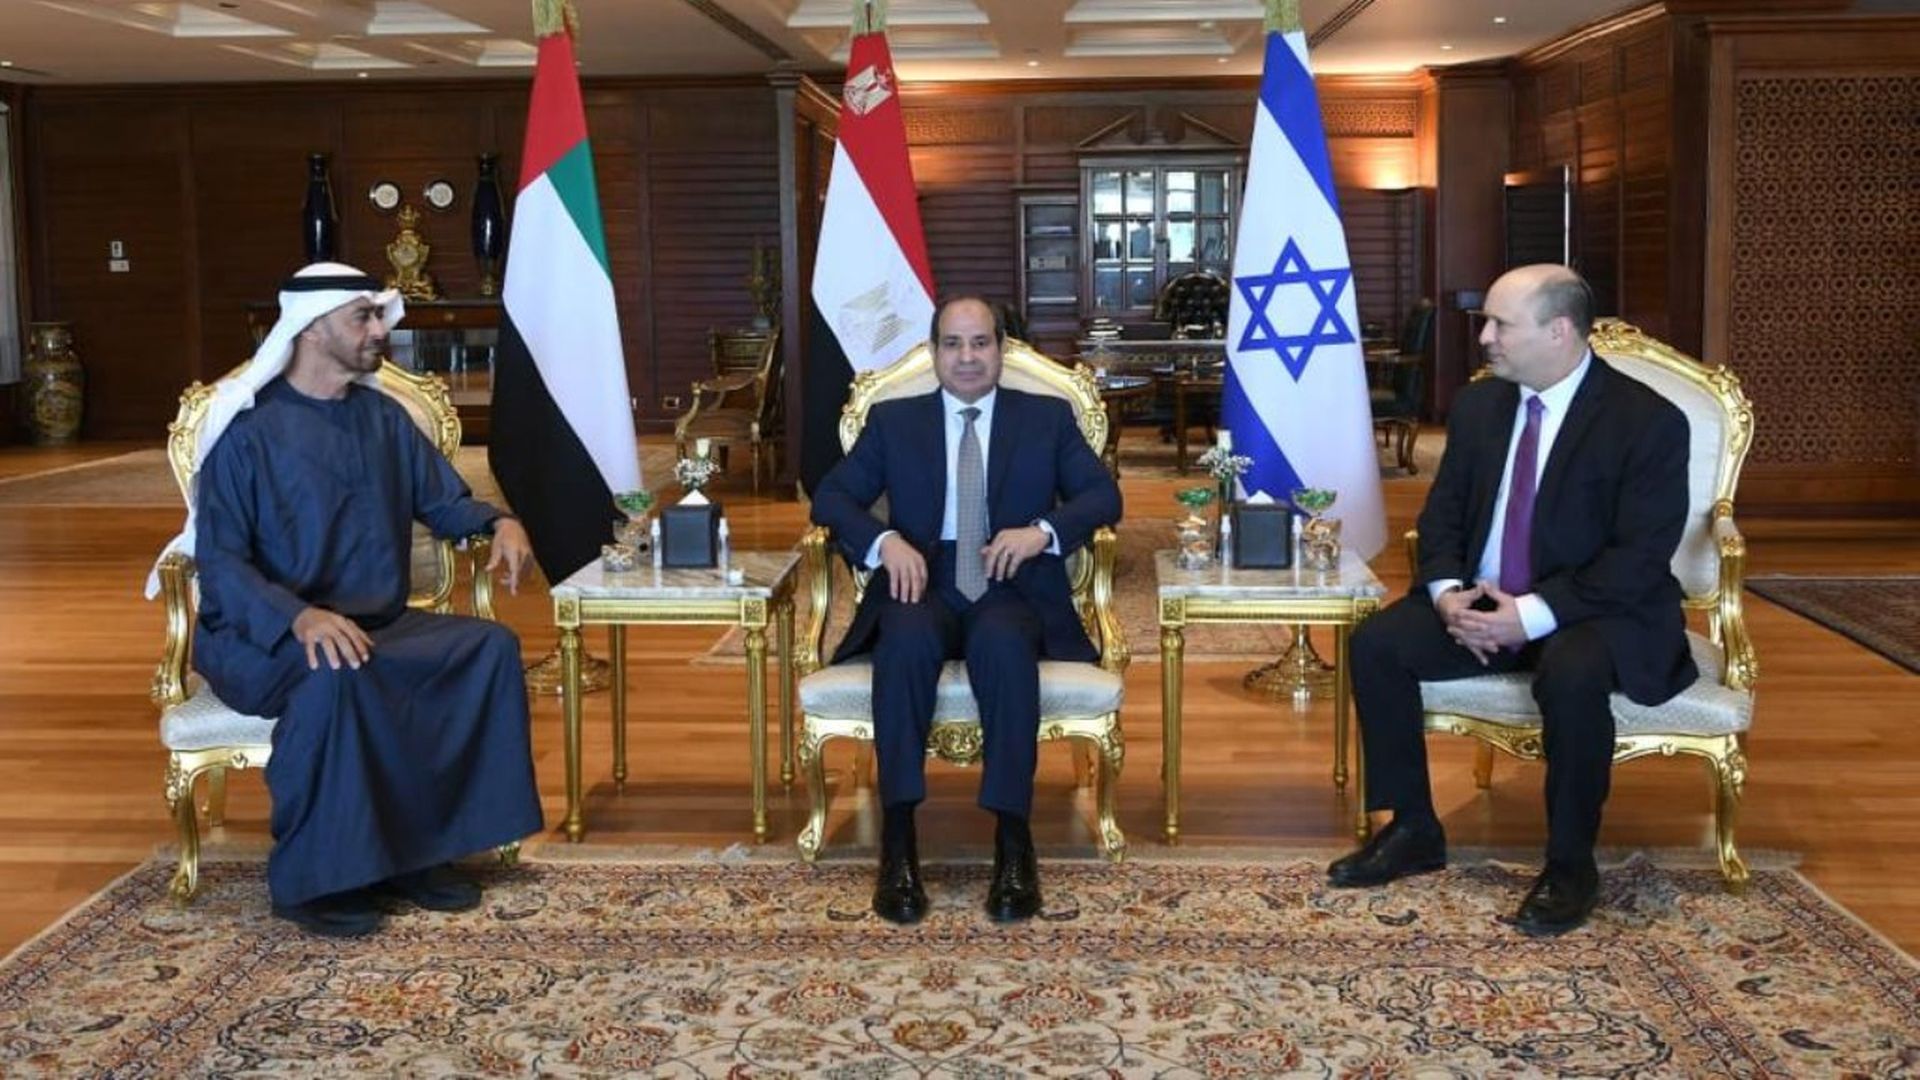 Egyptian President Abdul Fattah al-Sisi, Israeli Prime Minister Naftali Bennett and the Abu Dhabi Crown Prince Mohammed bin Zayed 